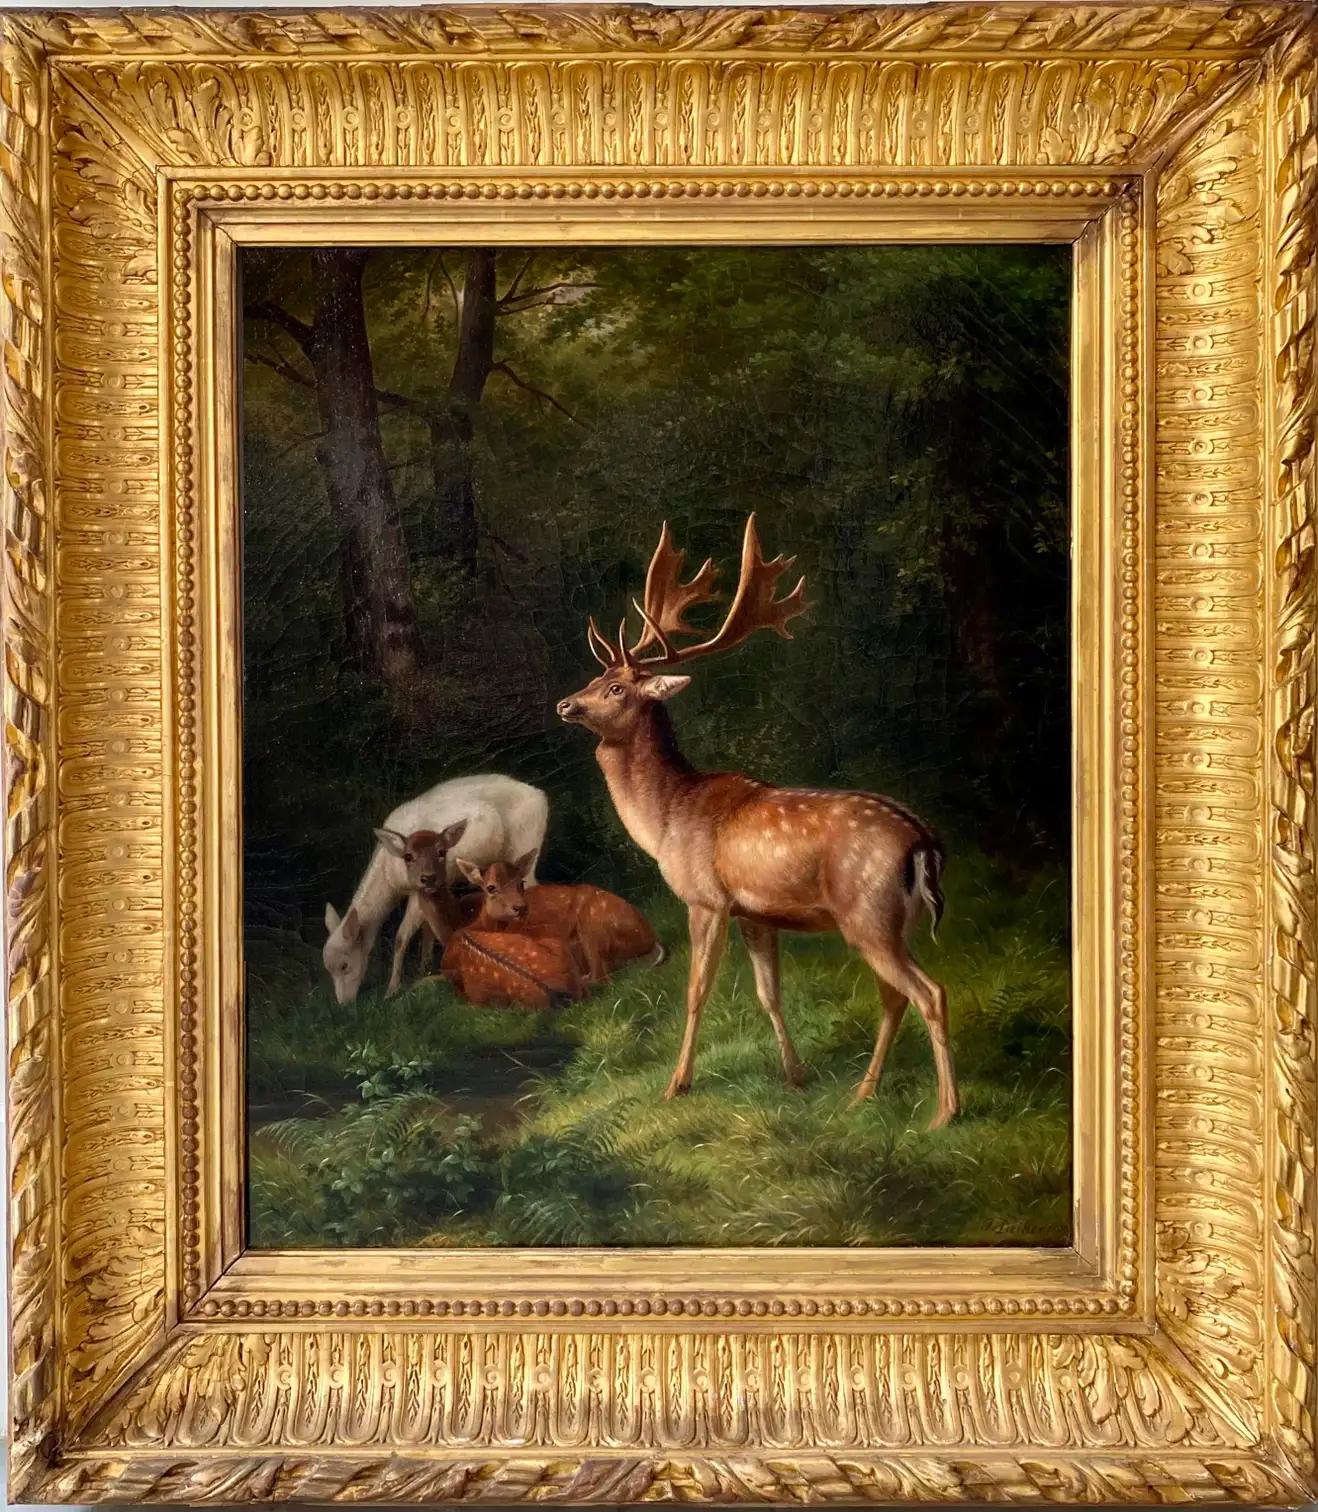 Johannes Christian Deiker Animal Painting - 19th century Romantic painting Deer family in a forest - Romantic Landscape Doe